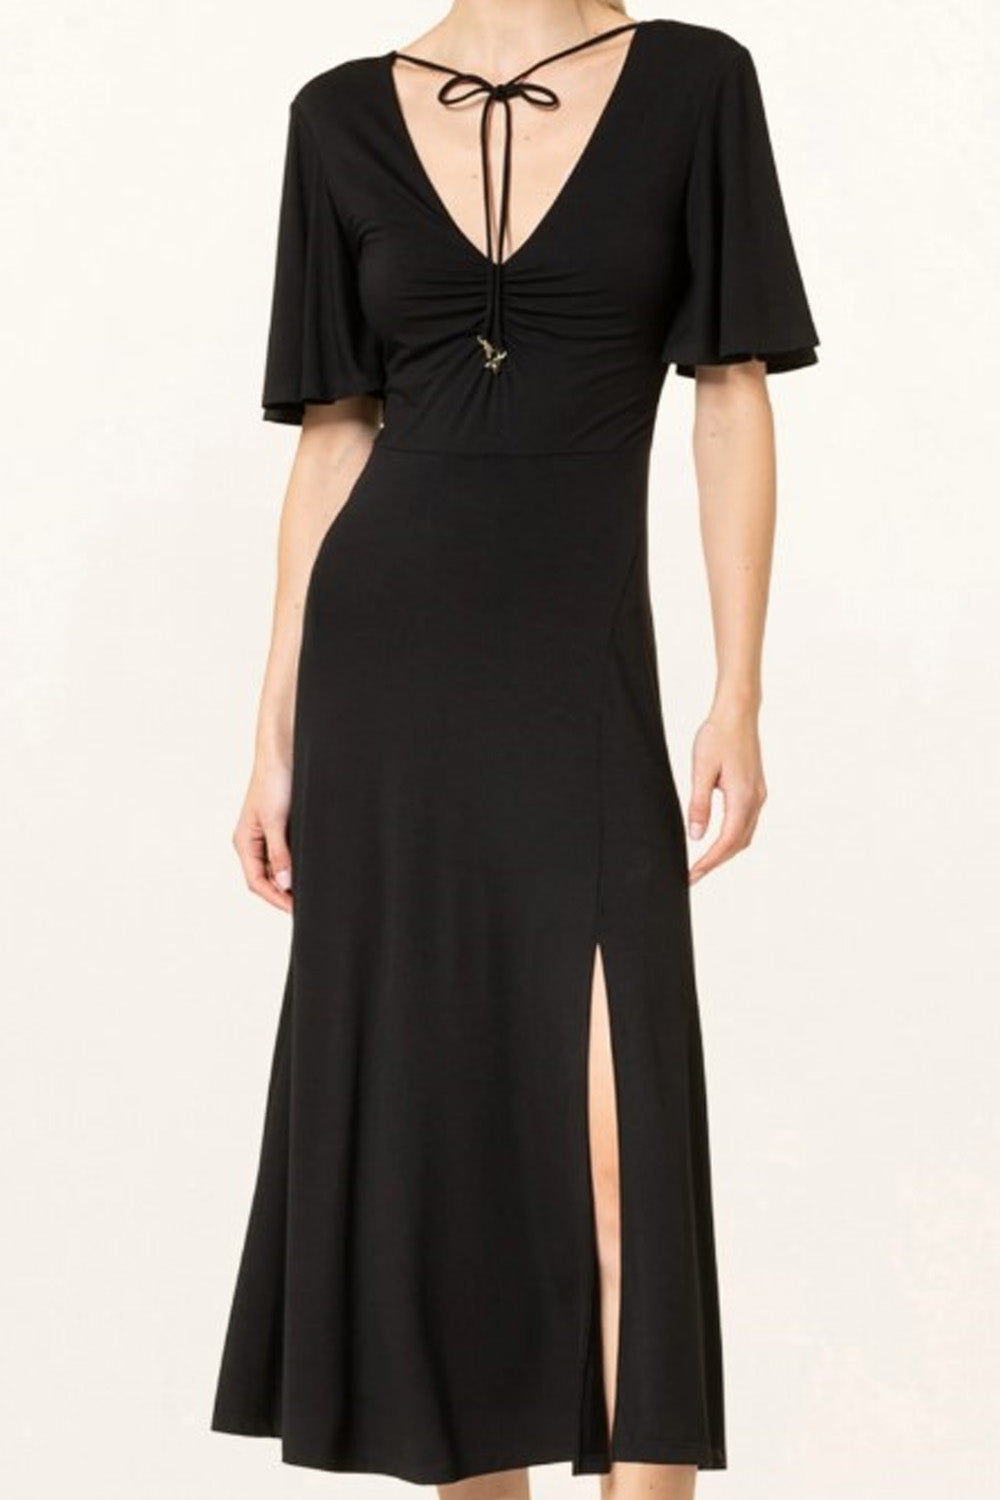 Viridescent Black Dress